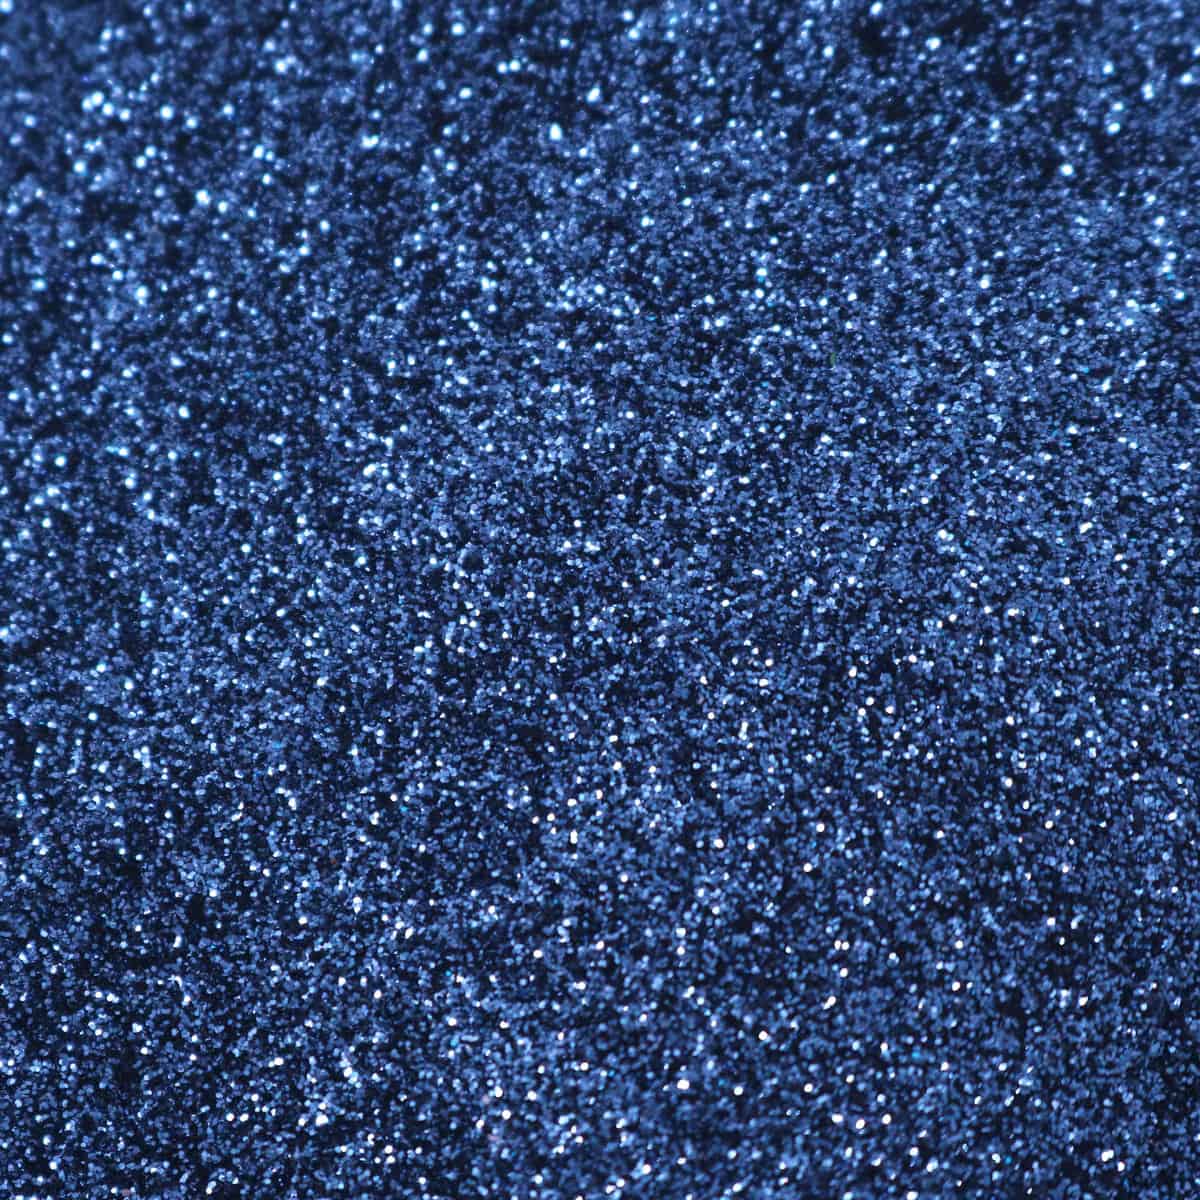 Fine dark blue glitter